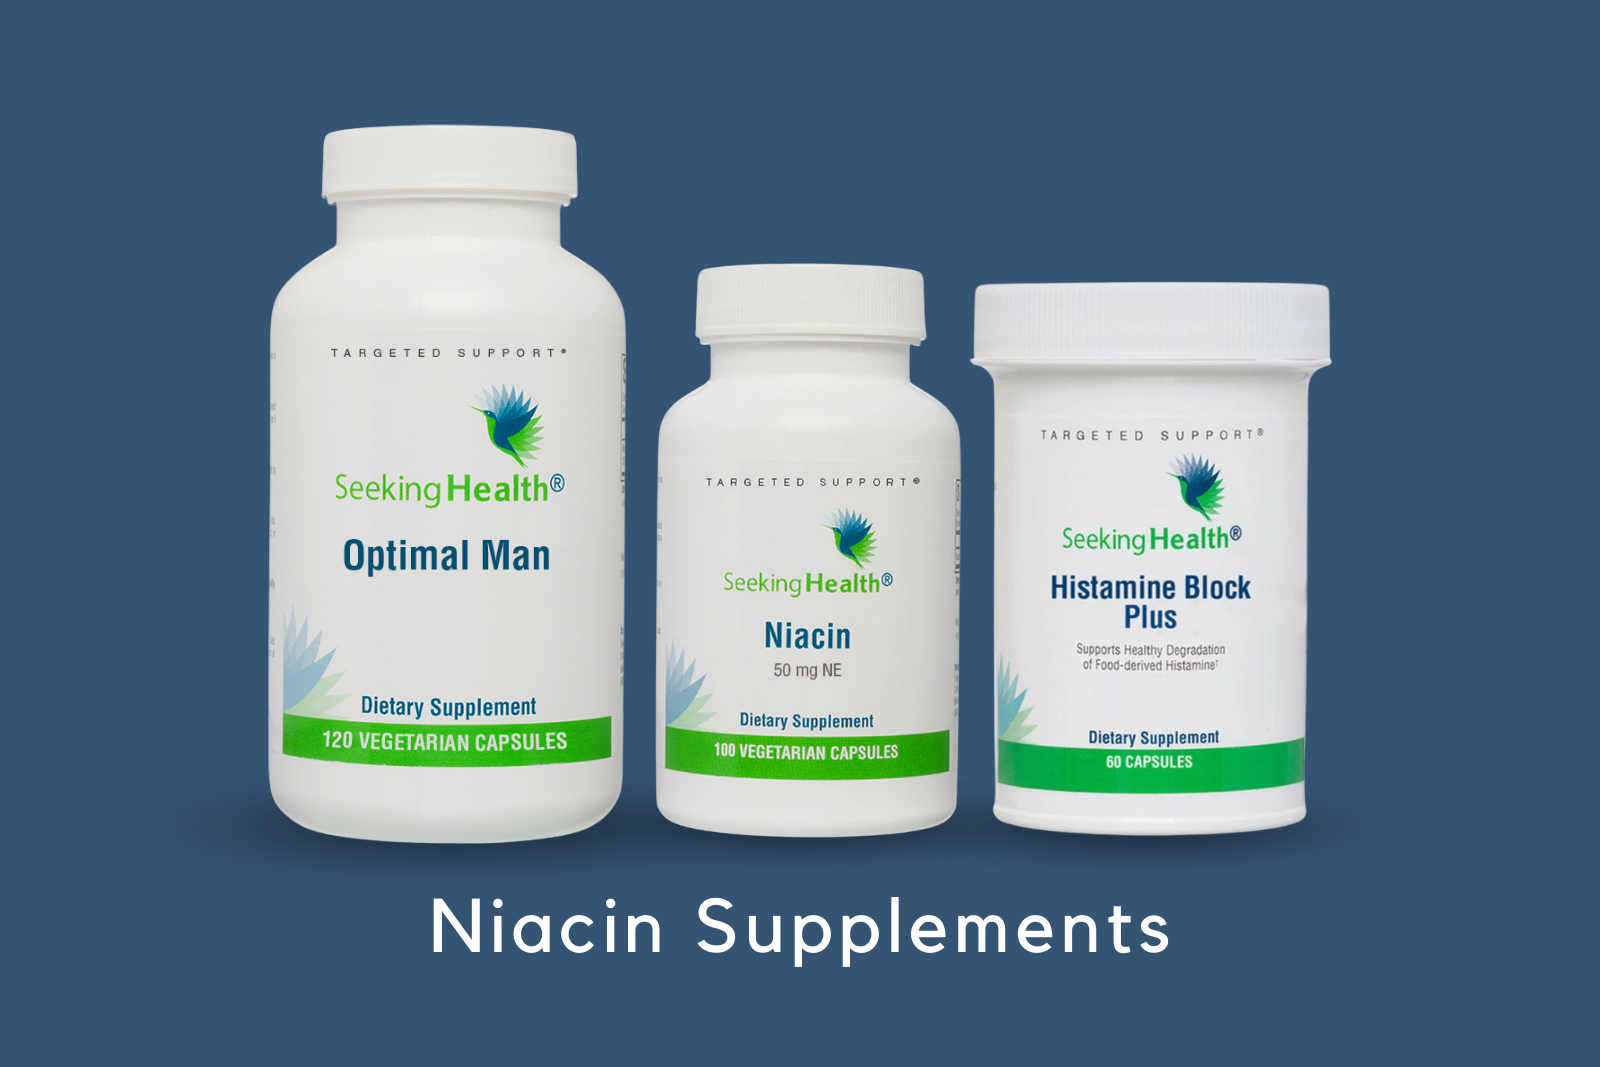 Niacin Supplements by Seeking Health